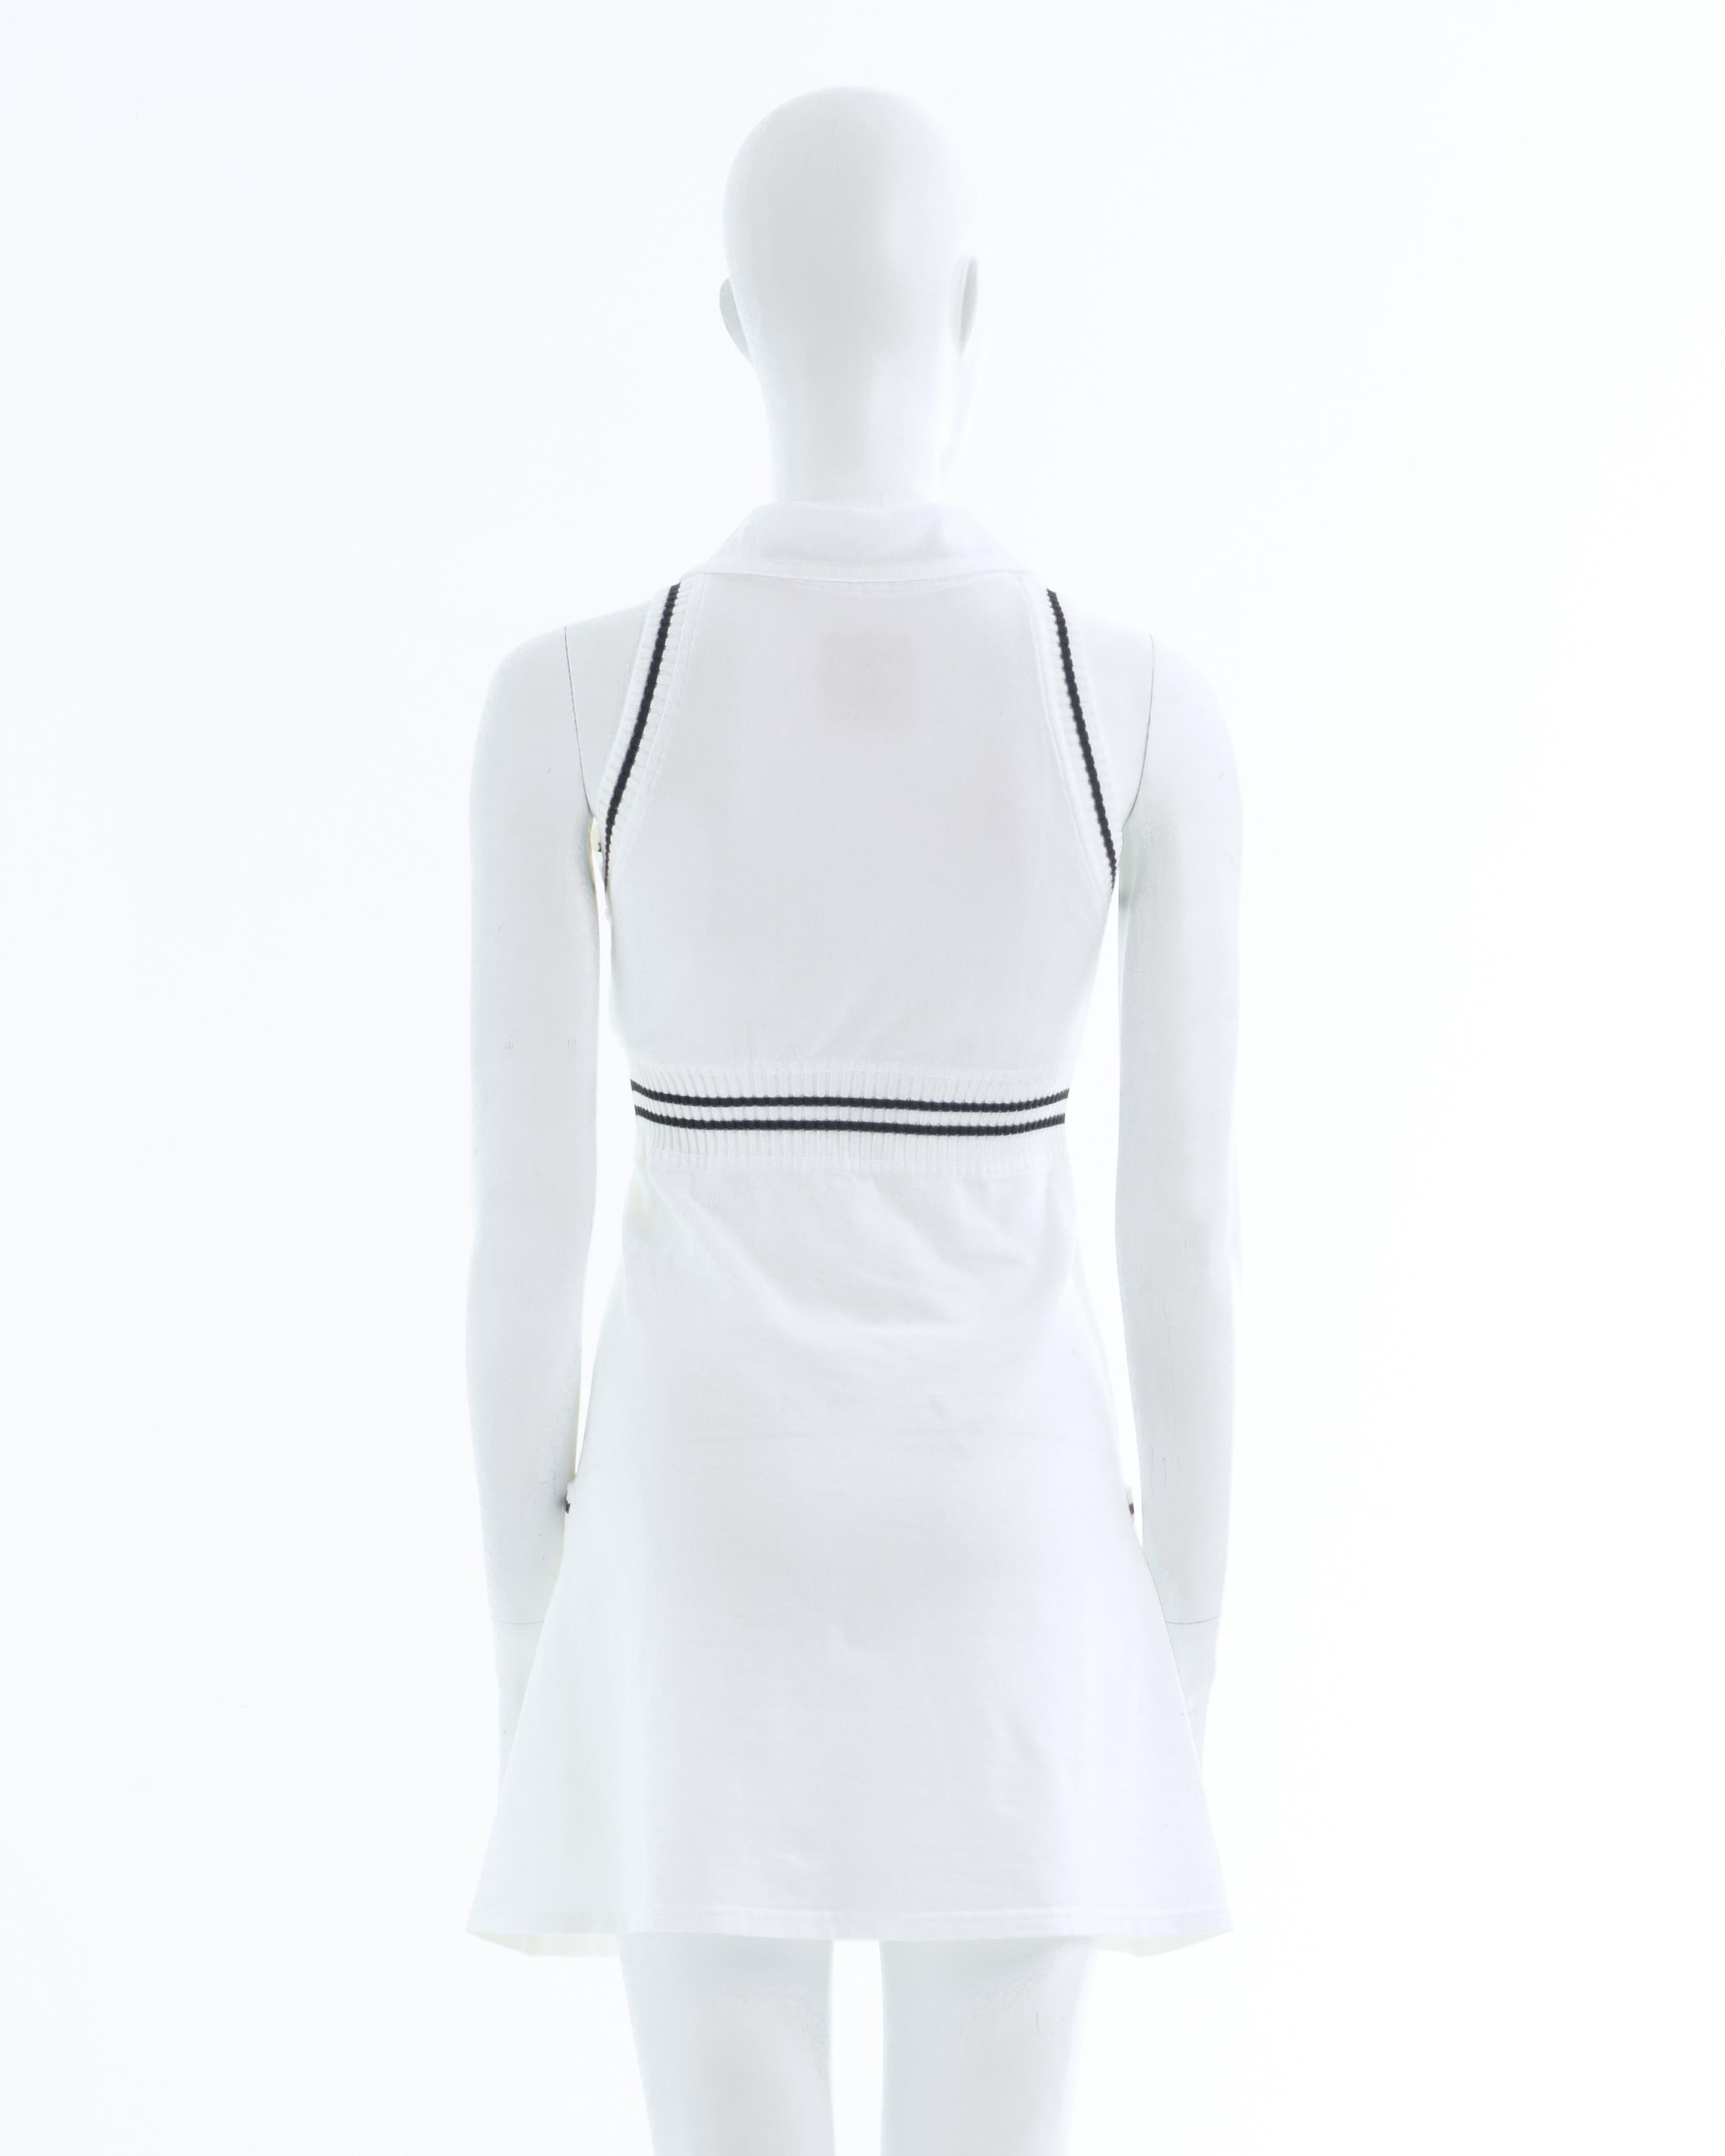 Women's Chanel by Karl Lagerfeld F/W 2003 White cotton sleeveless tennis mini dress For Sale